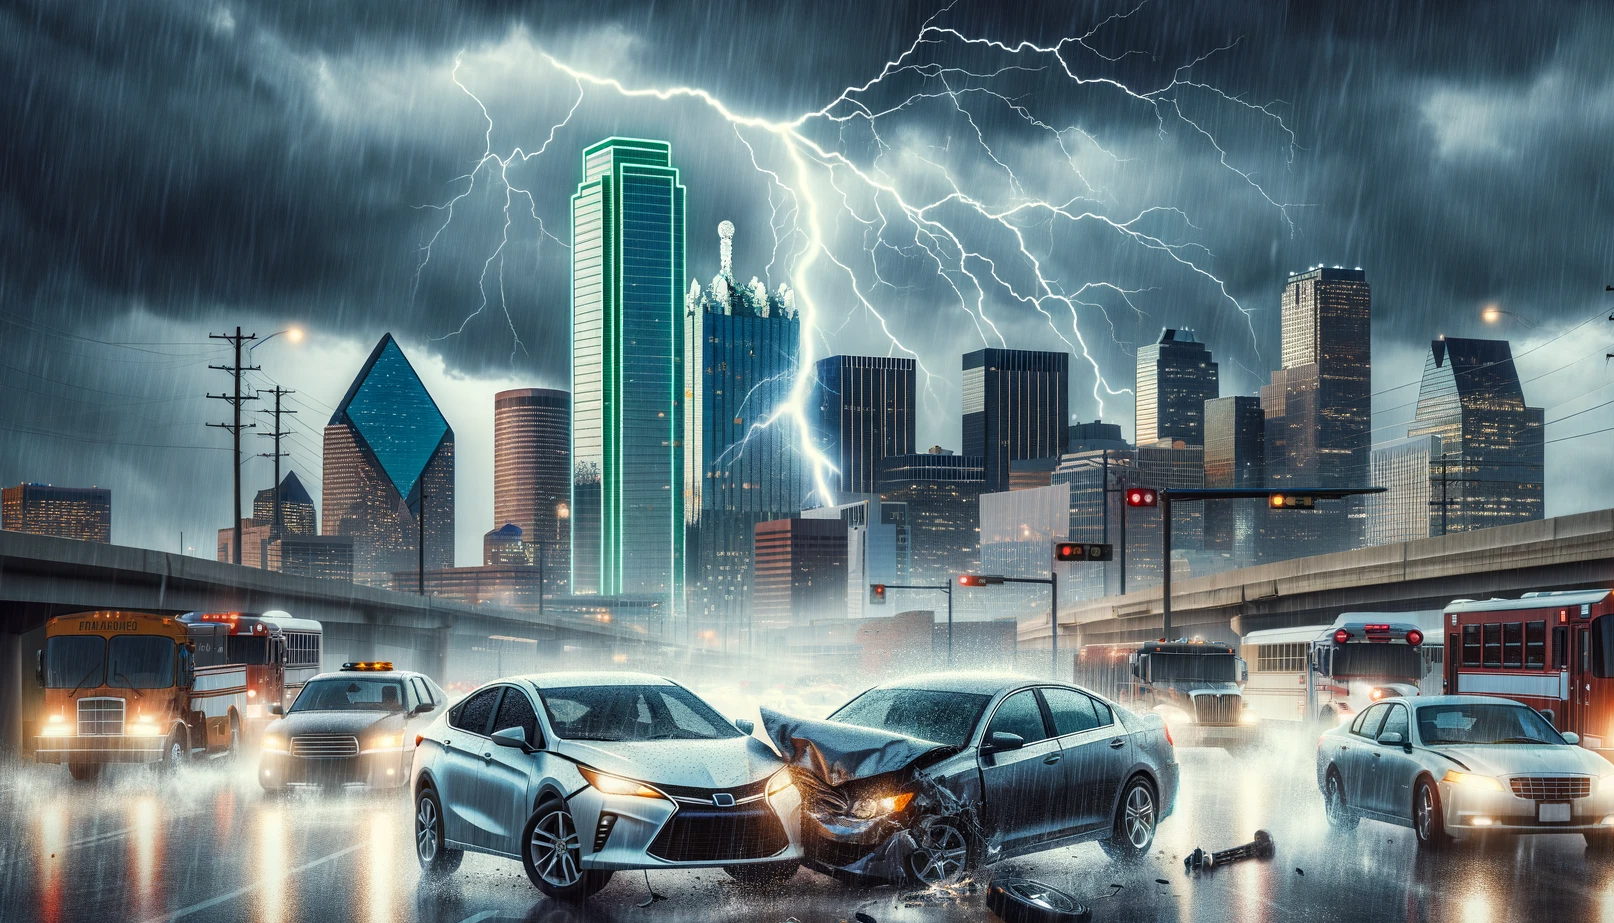 Dallas car accident during rain storm